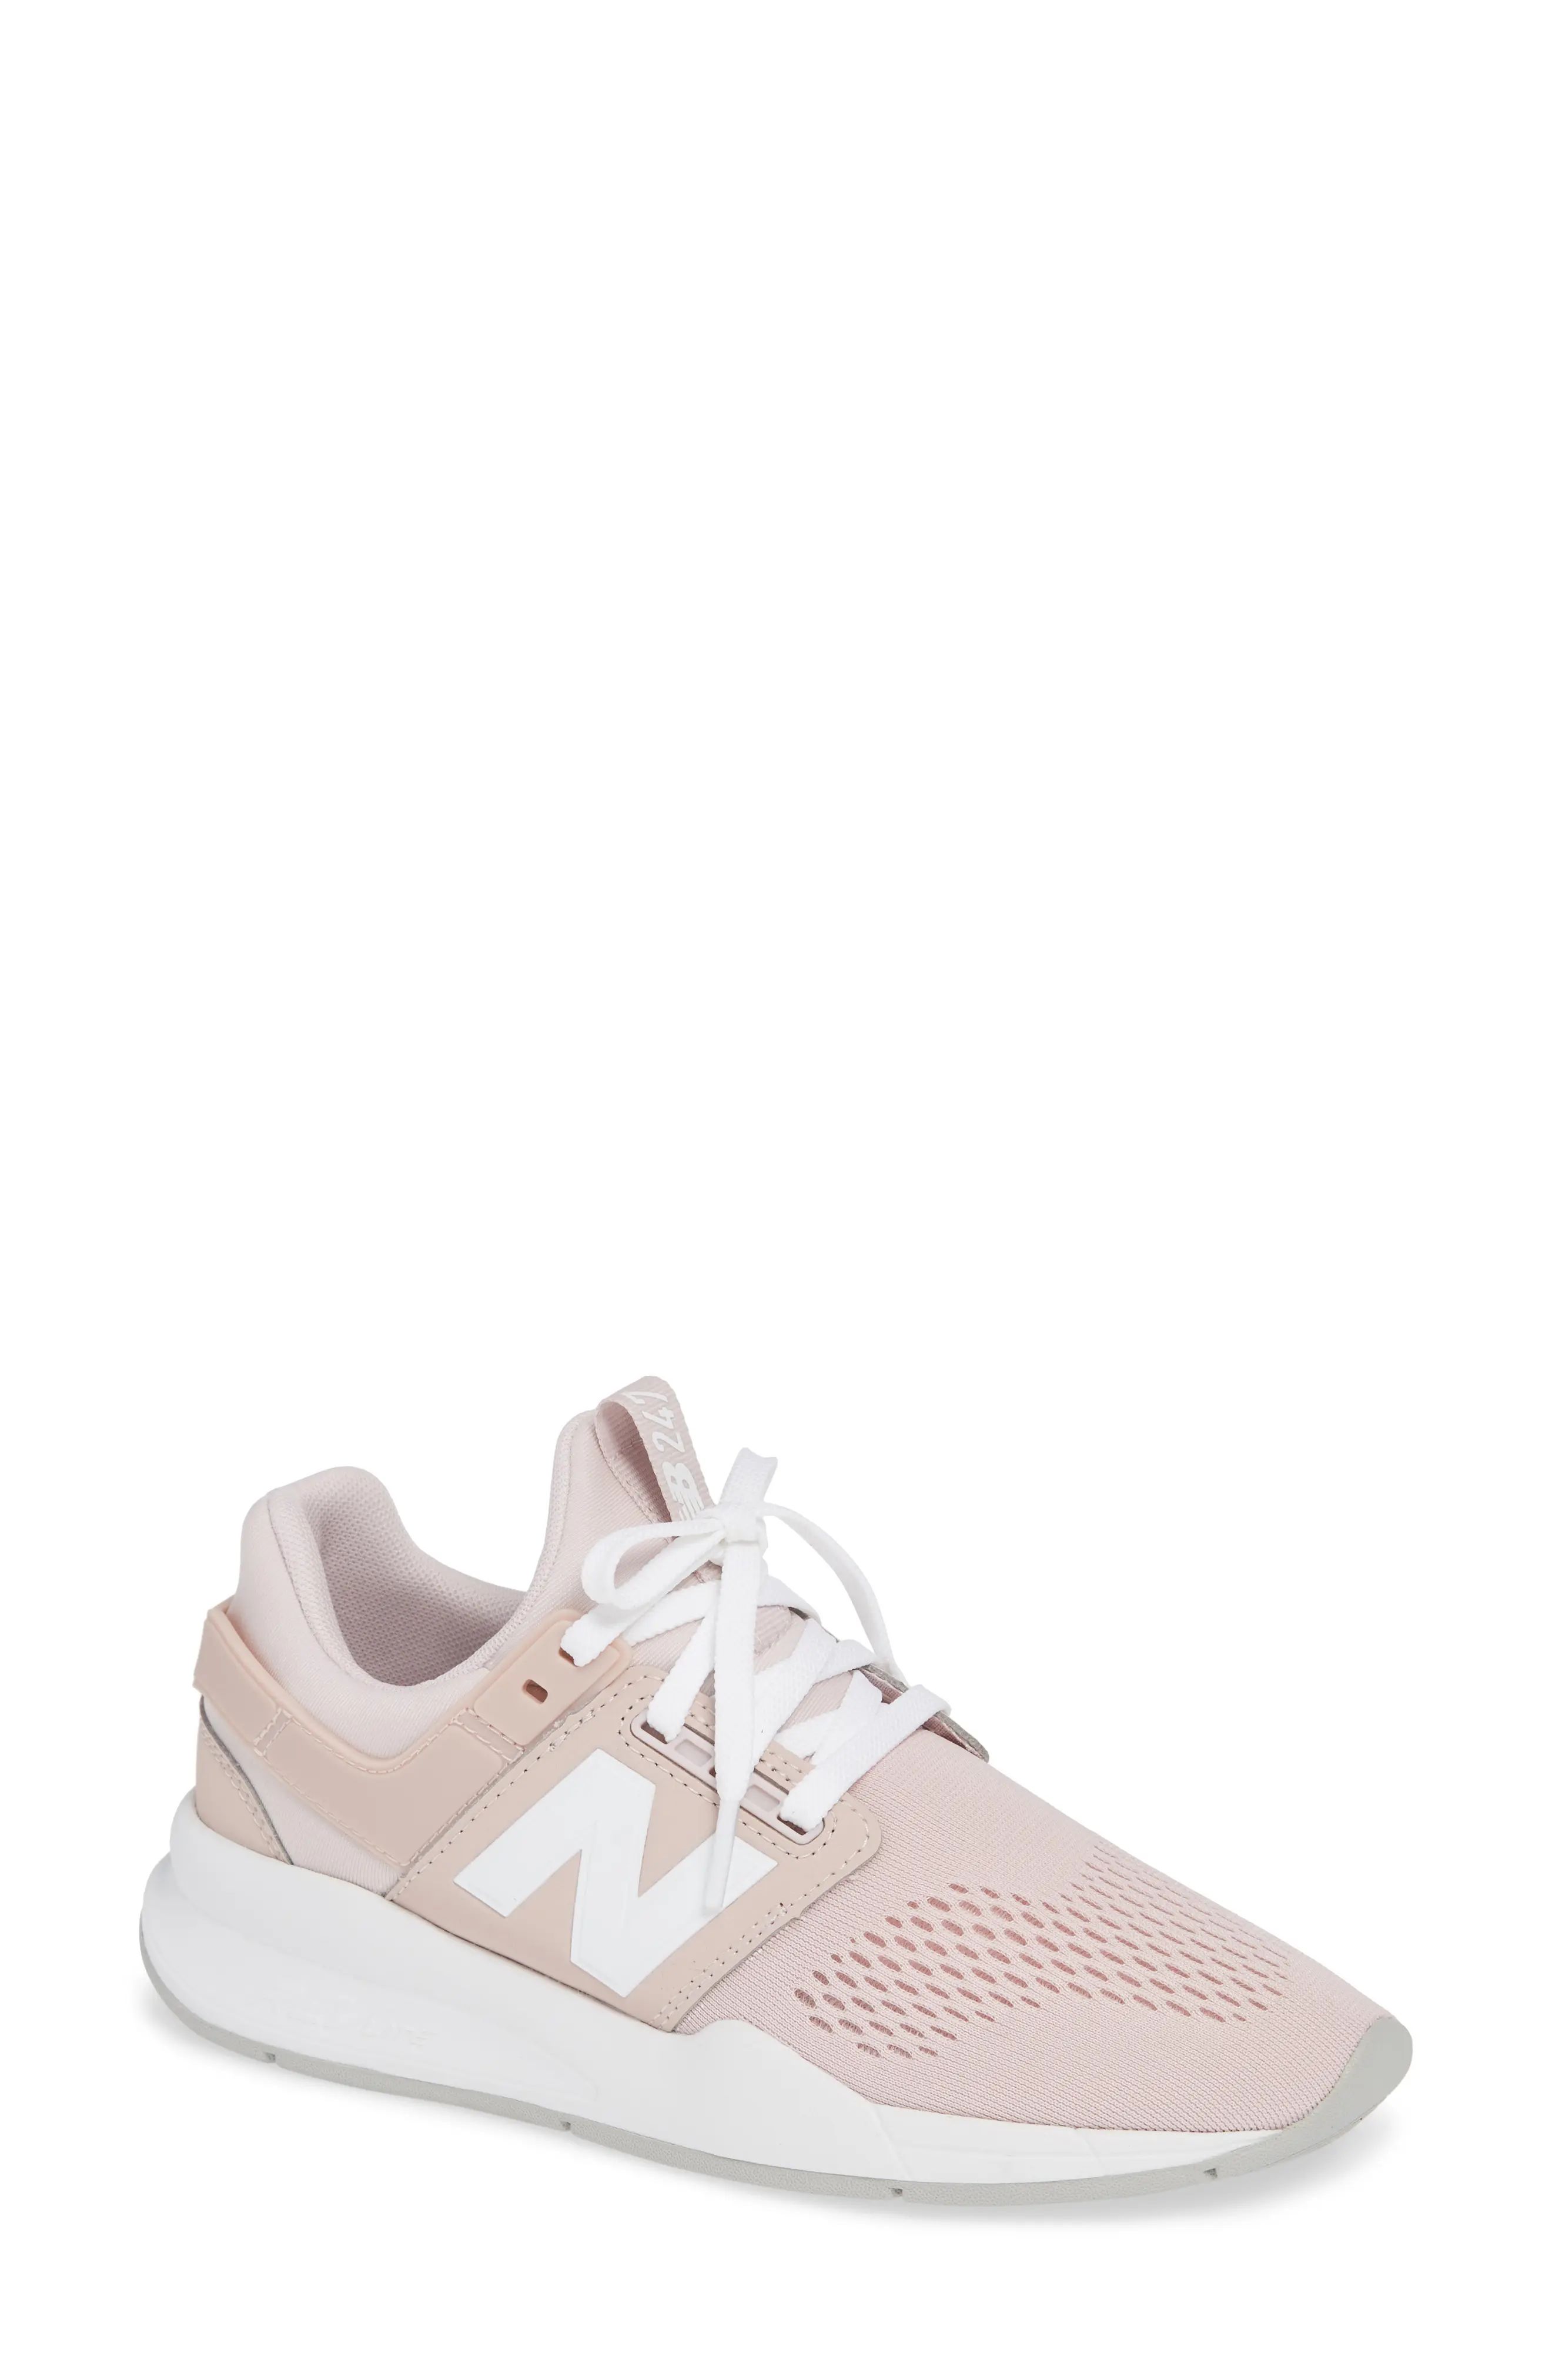 New Balance 247 Sneaker (Women) | Nordstrom